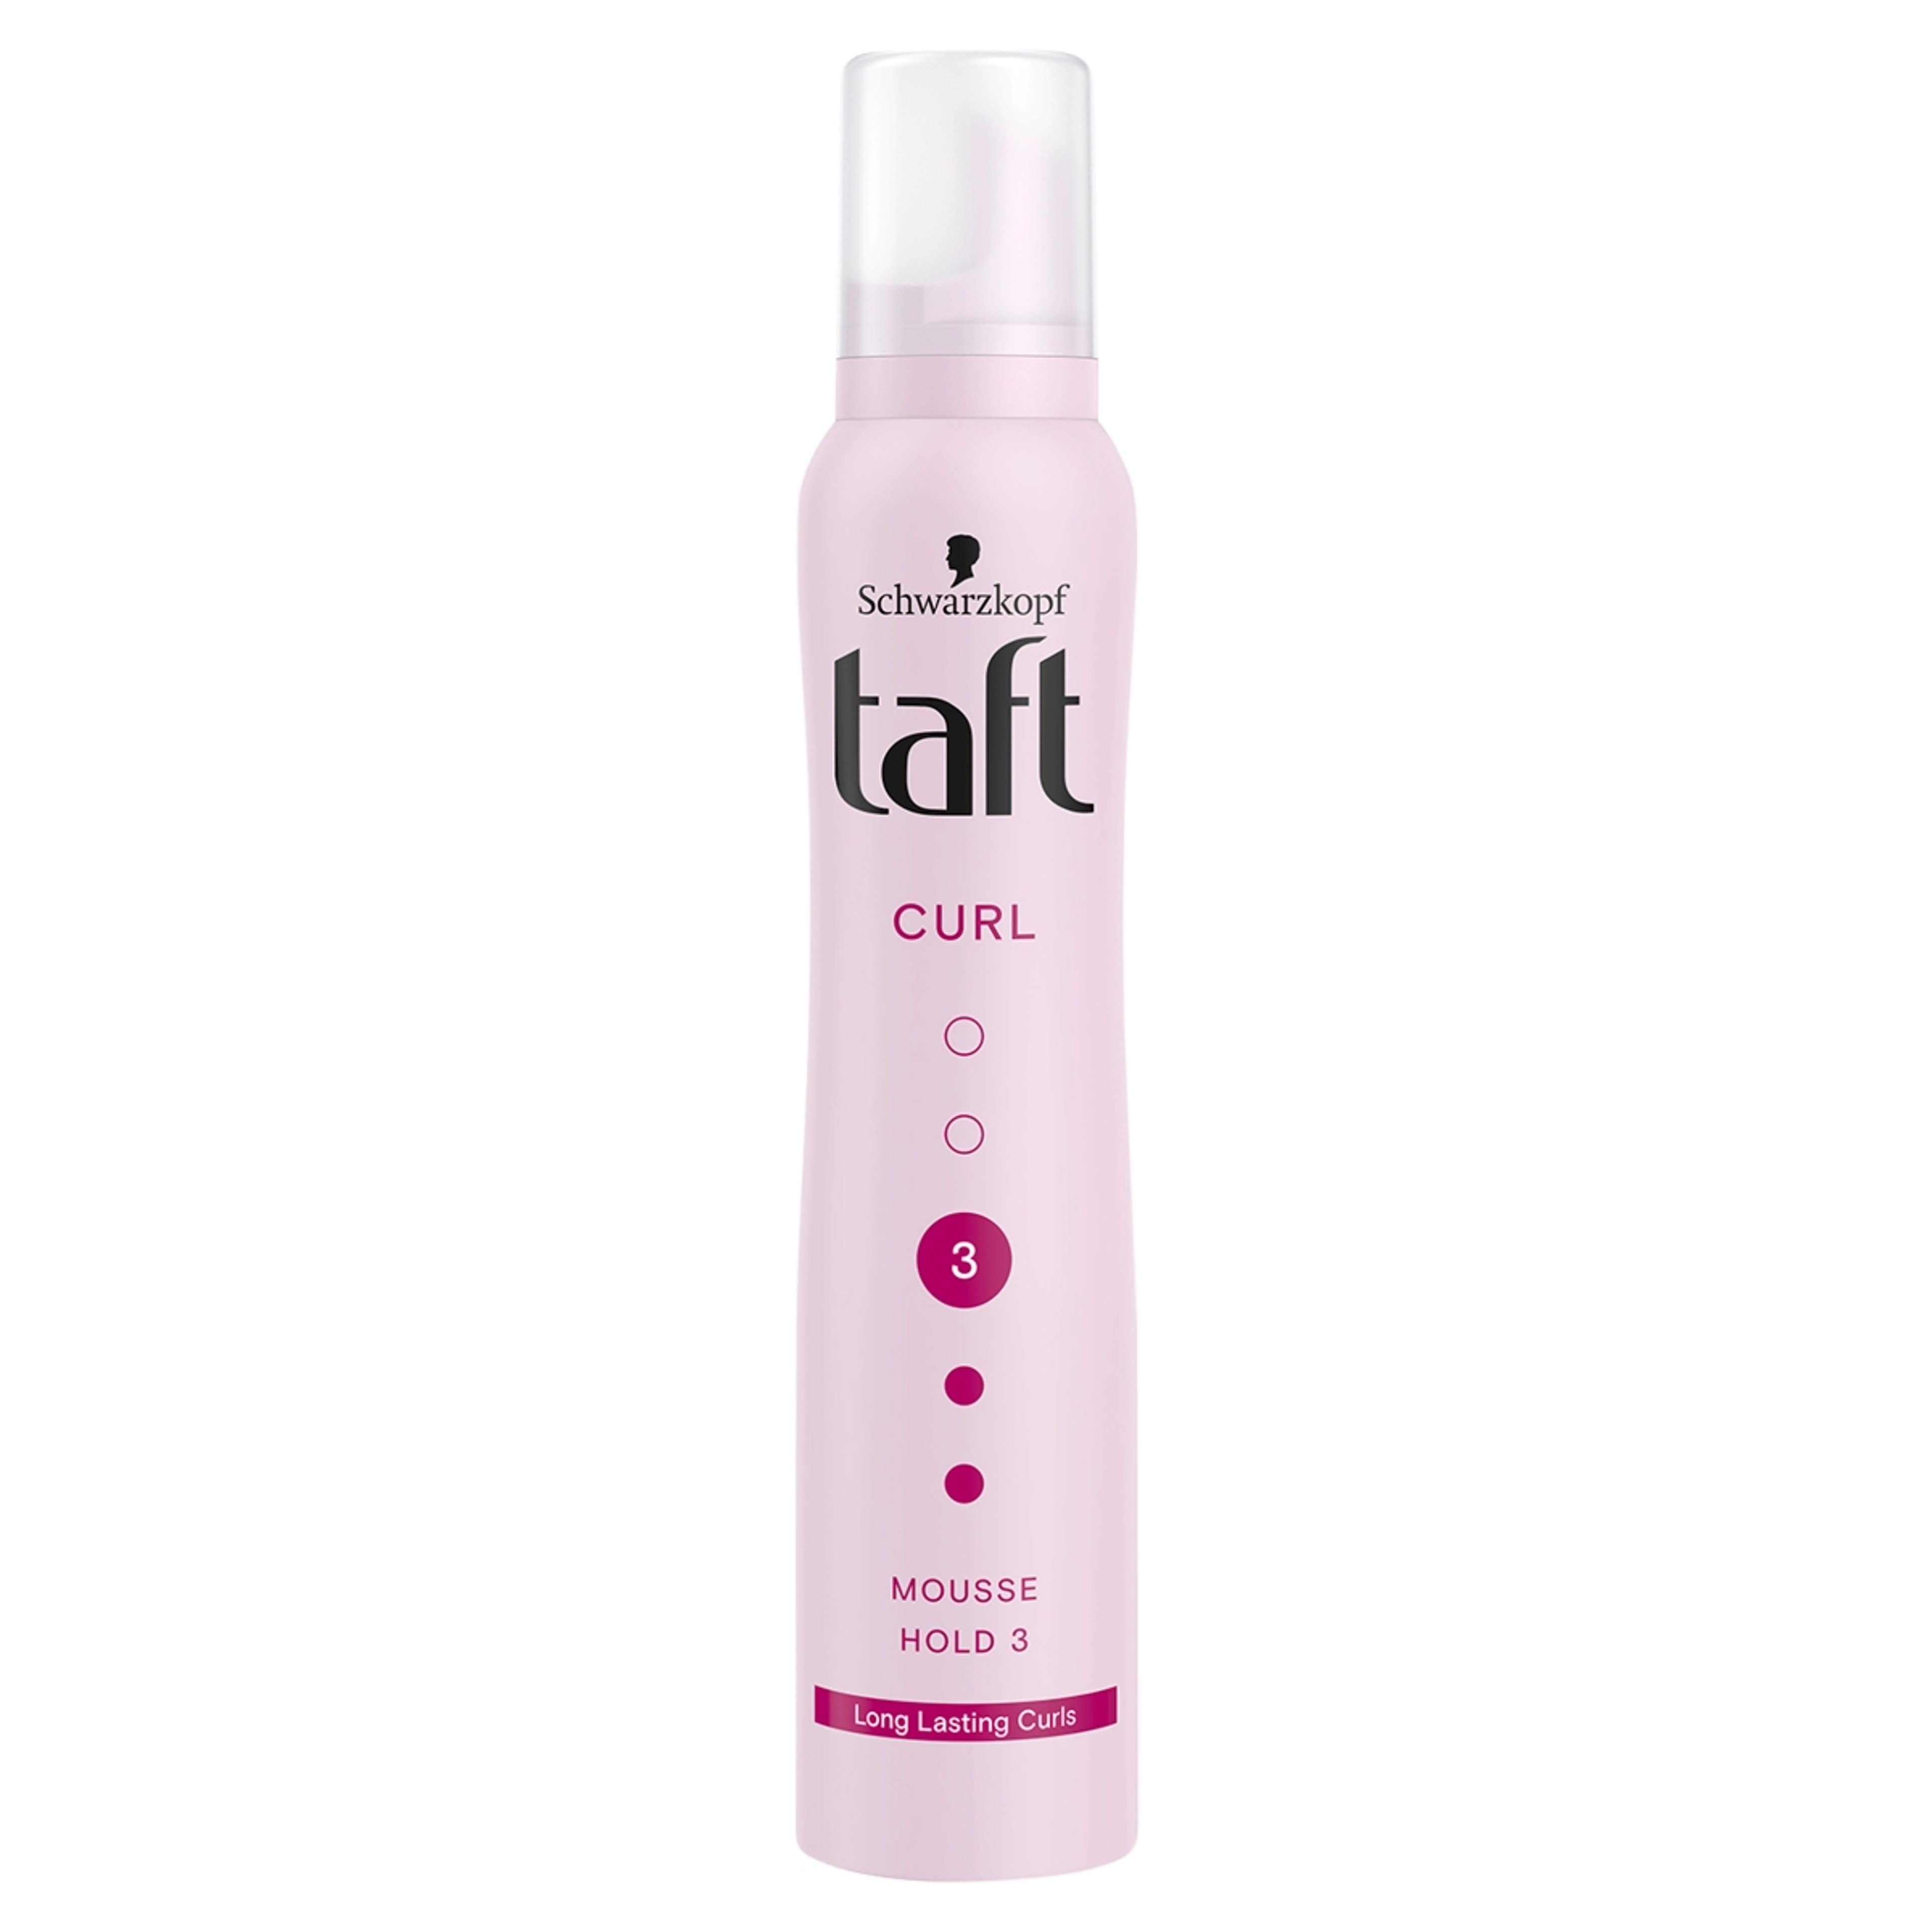 Taft Curl hajrögzítő hab hullámos hajra - 200 ml